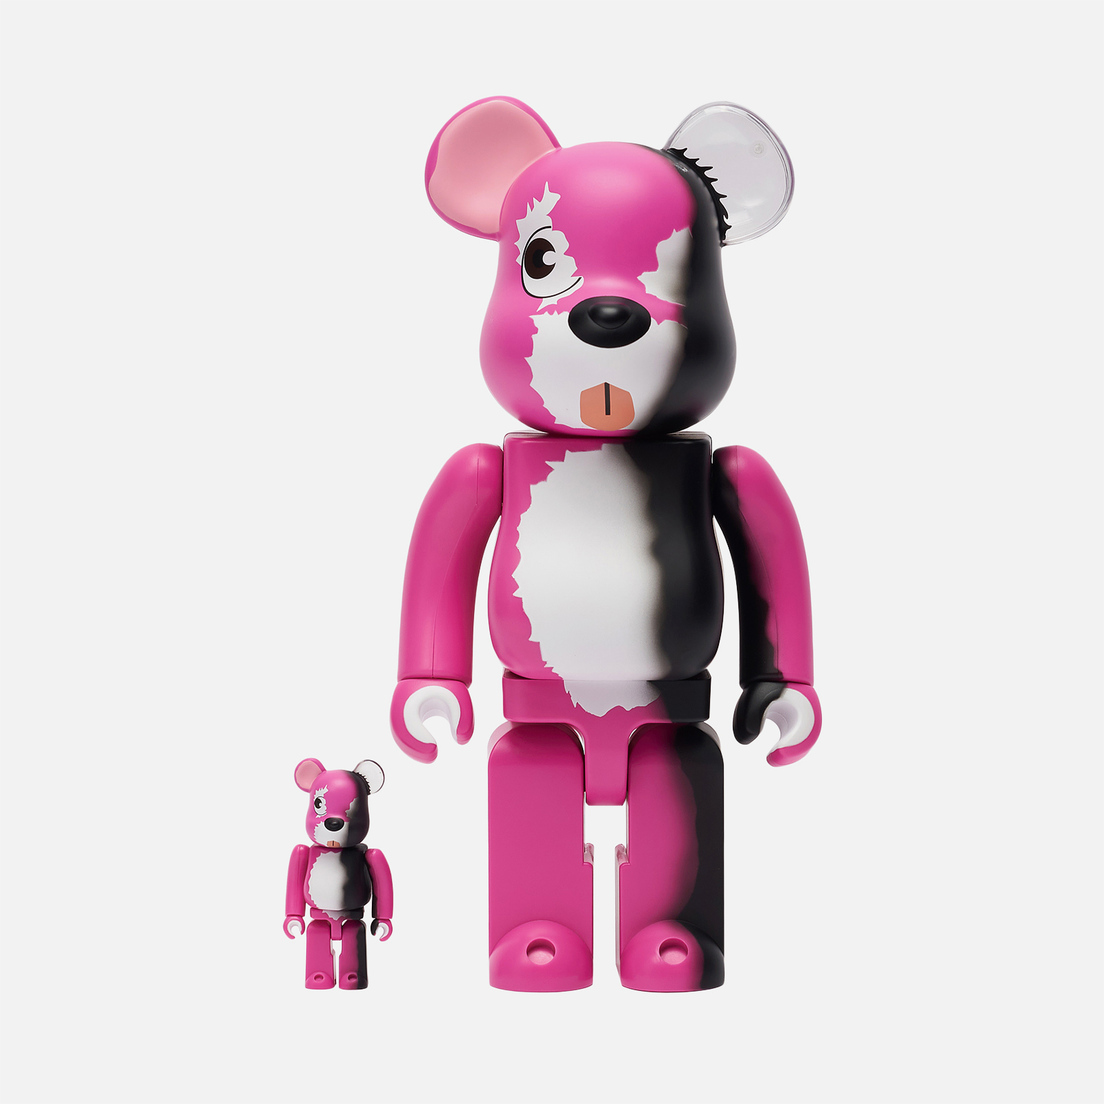 Medicom Toy Игрушка Breaking Bad Pink Bear 100% & 400%